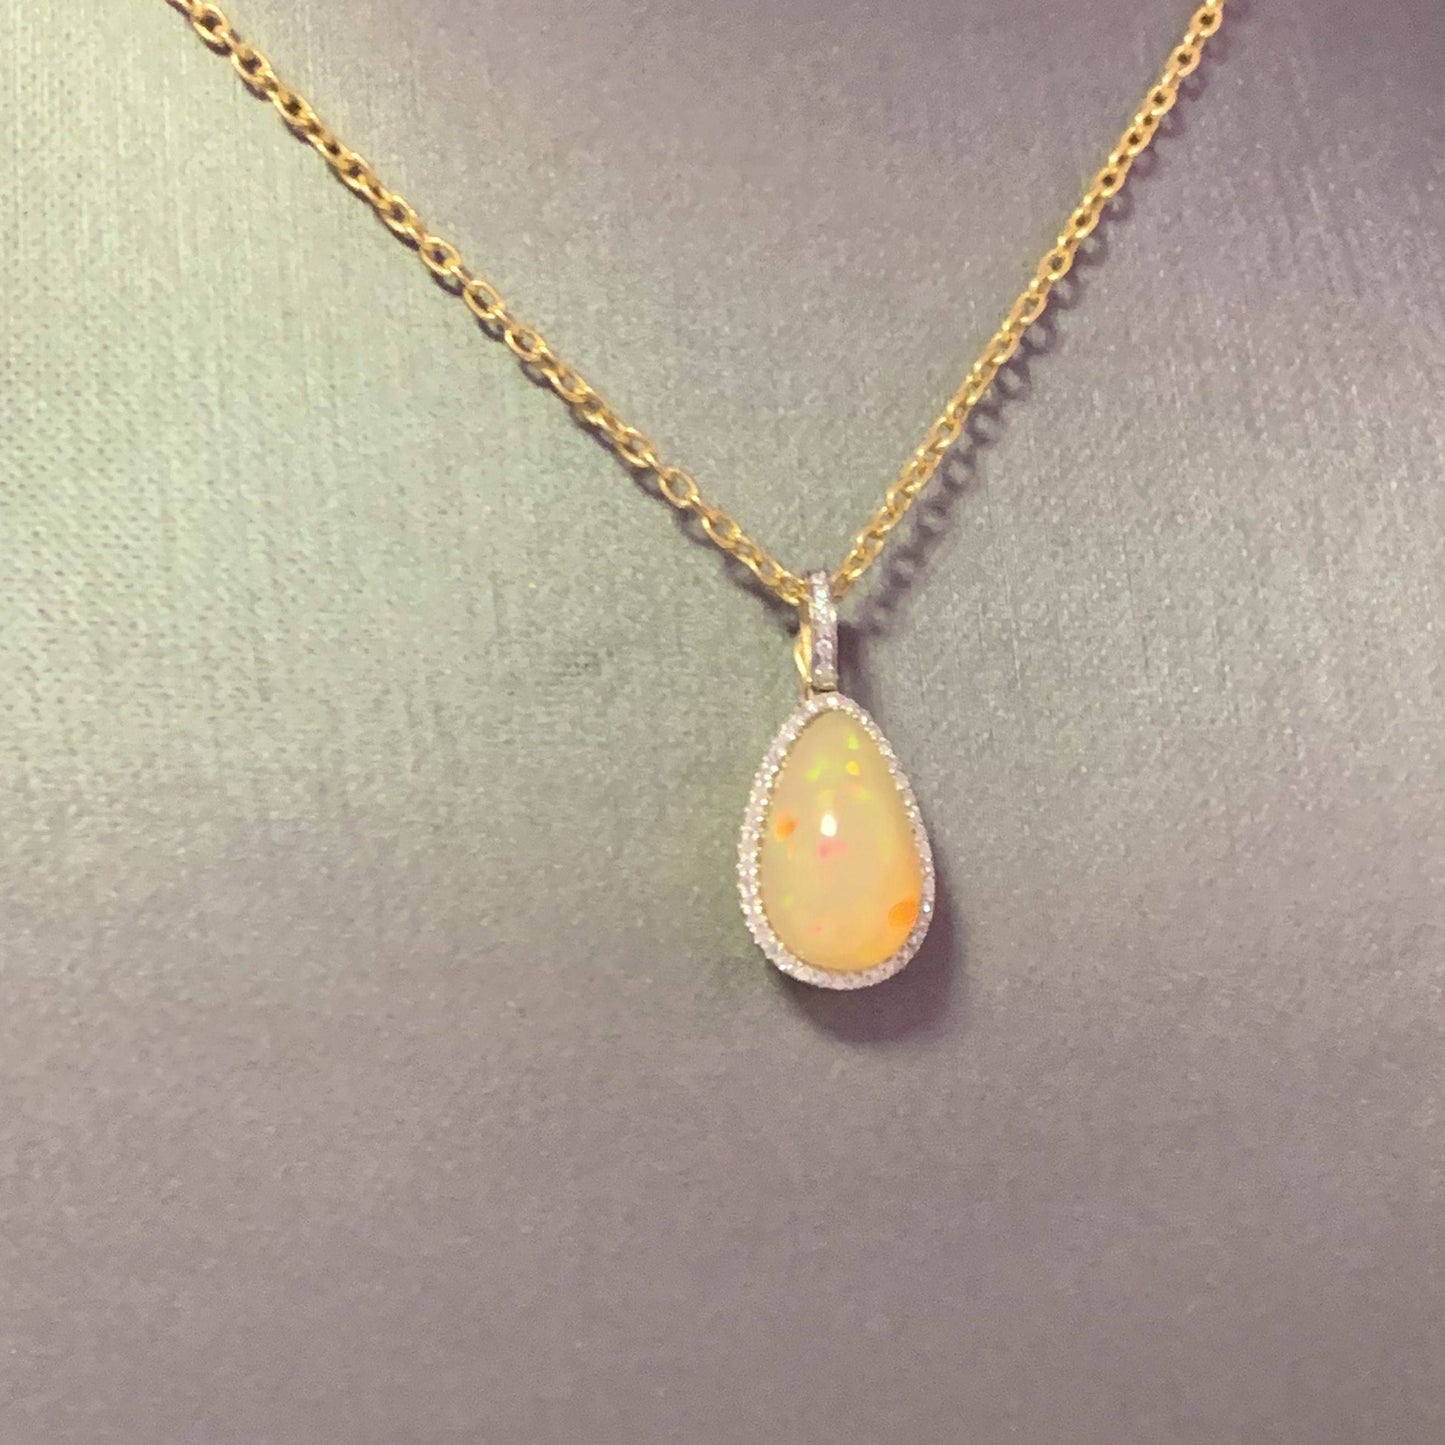 Natural Ethiopian Opal Diamond Necklace 17" 9.23 TCW Certified $5,950 114431 - Certified Fine Jewelry